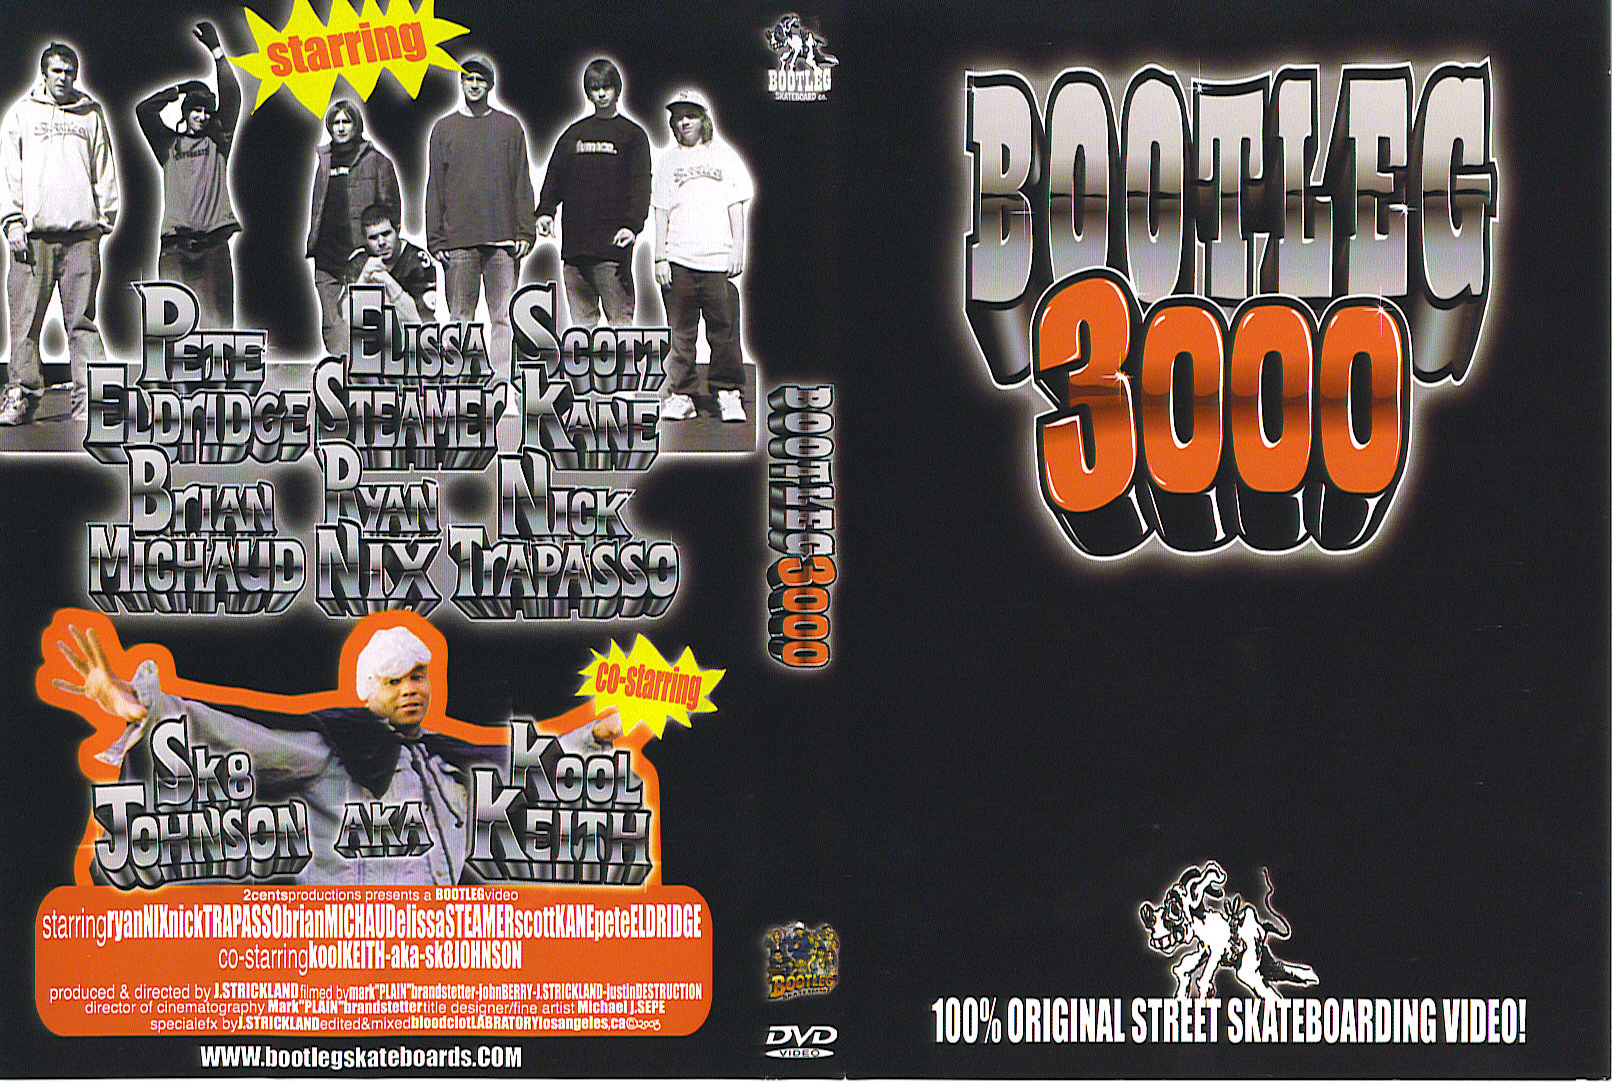 Bootleg 3000 cover